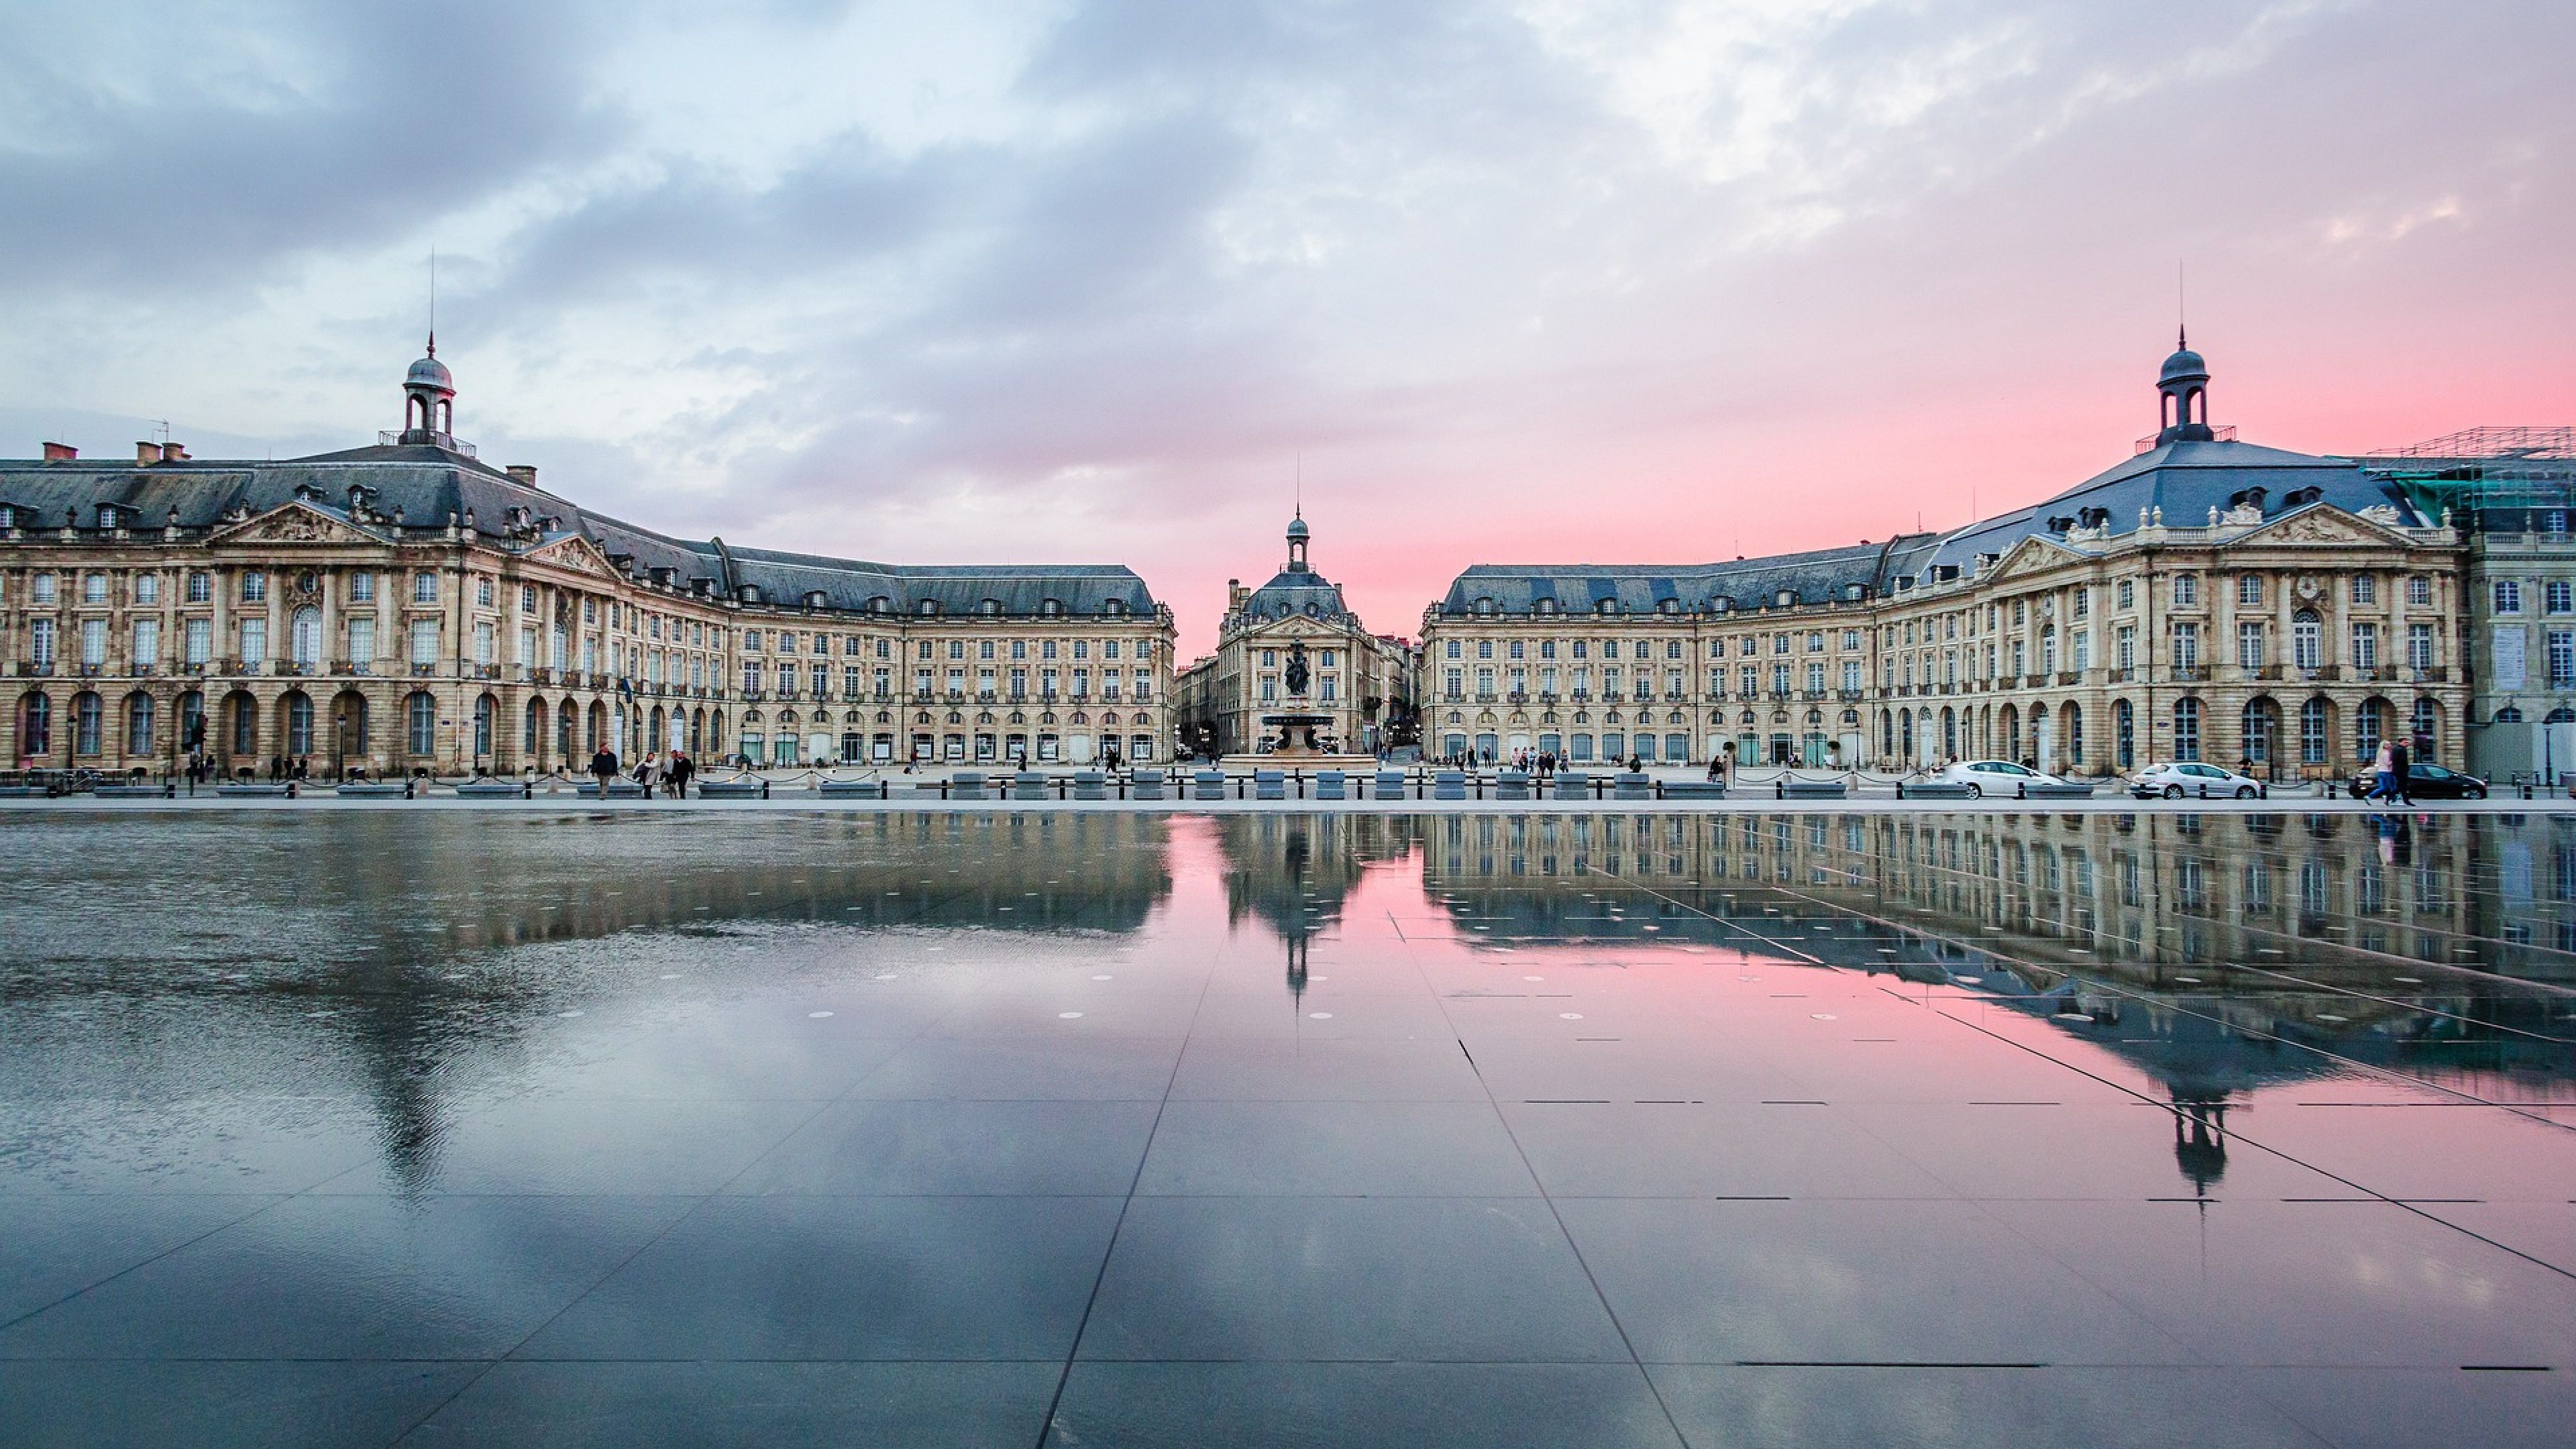 Discover the Citadelle de Blaye - Bordeaux Travel Guide